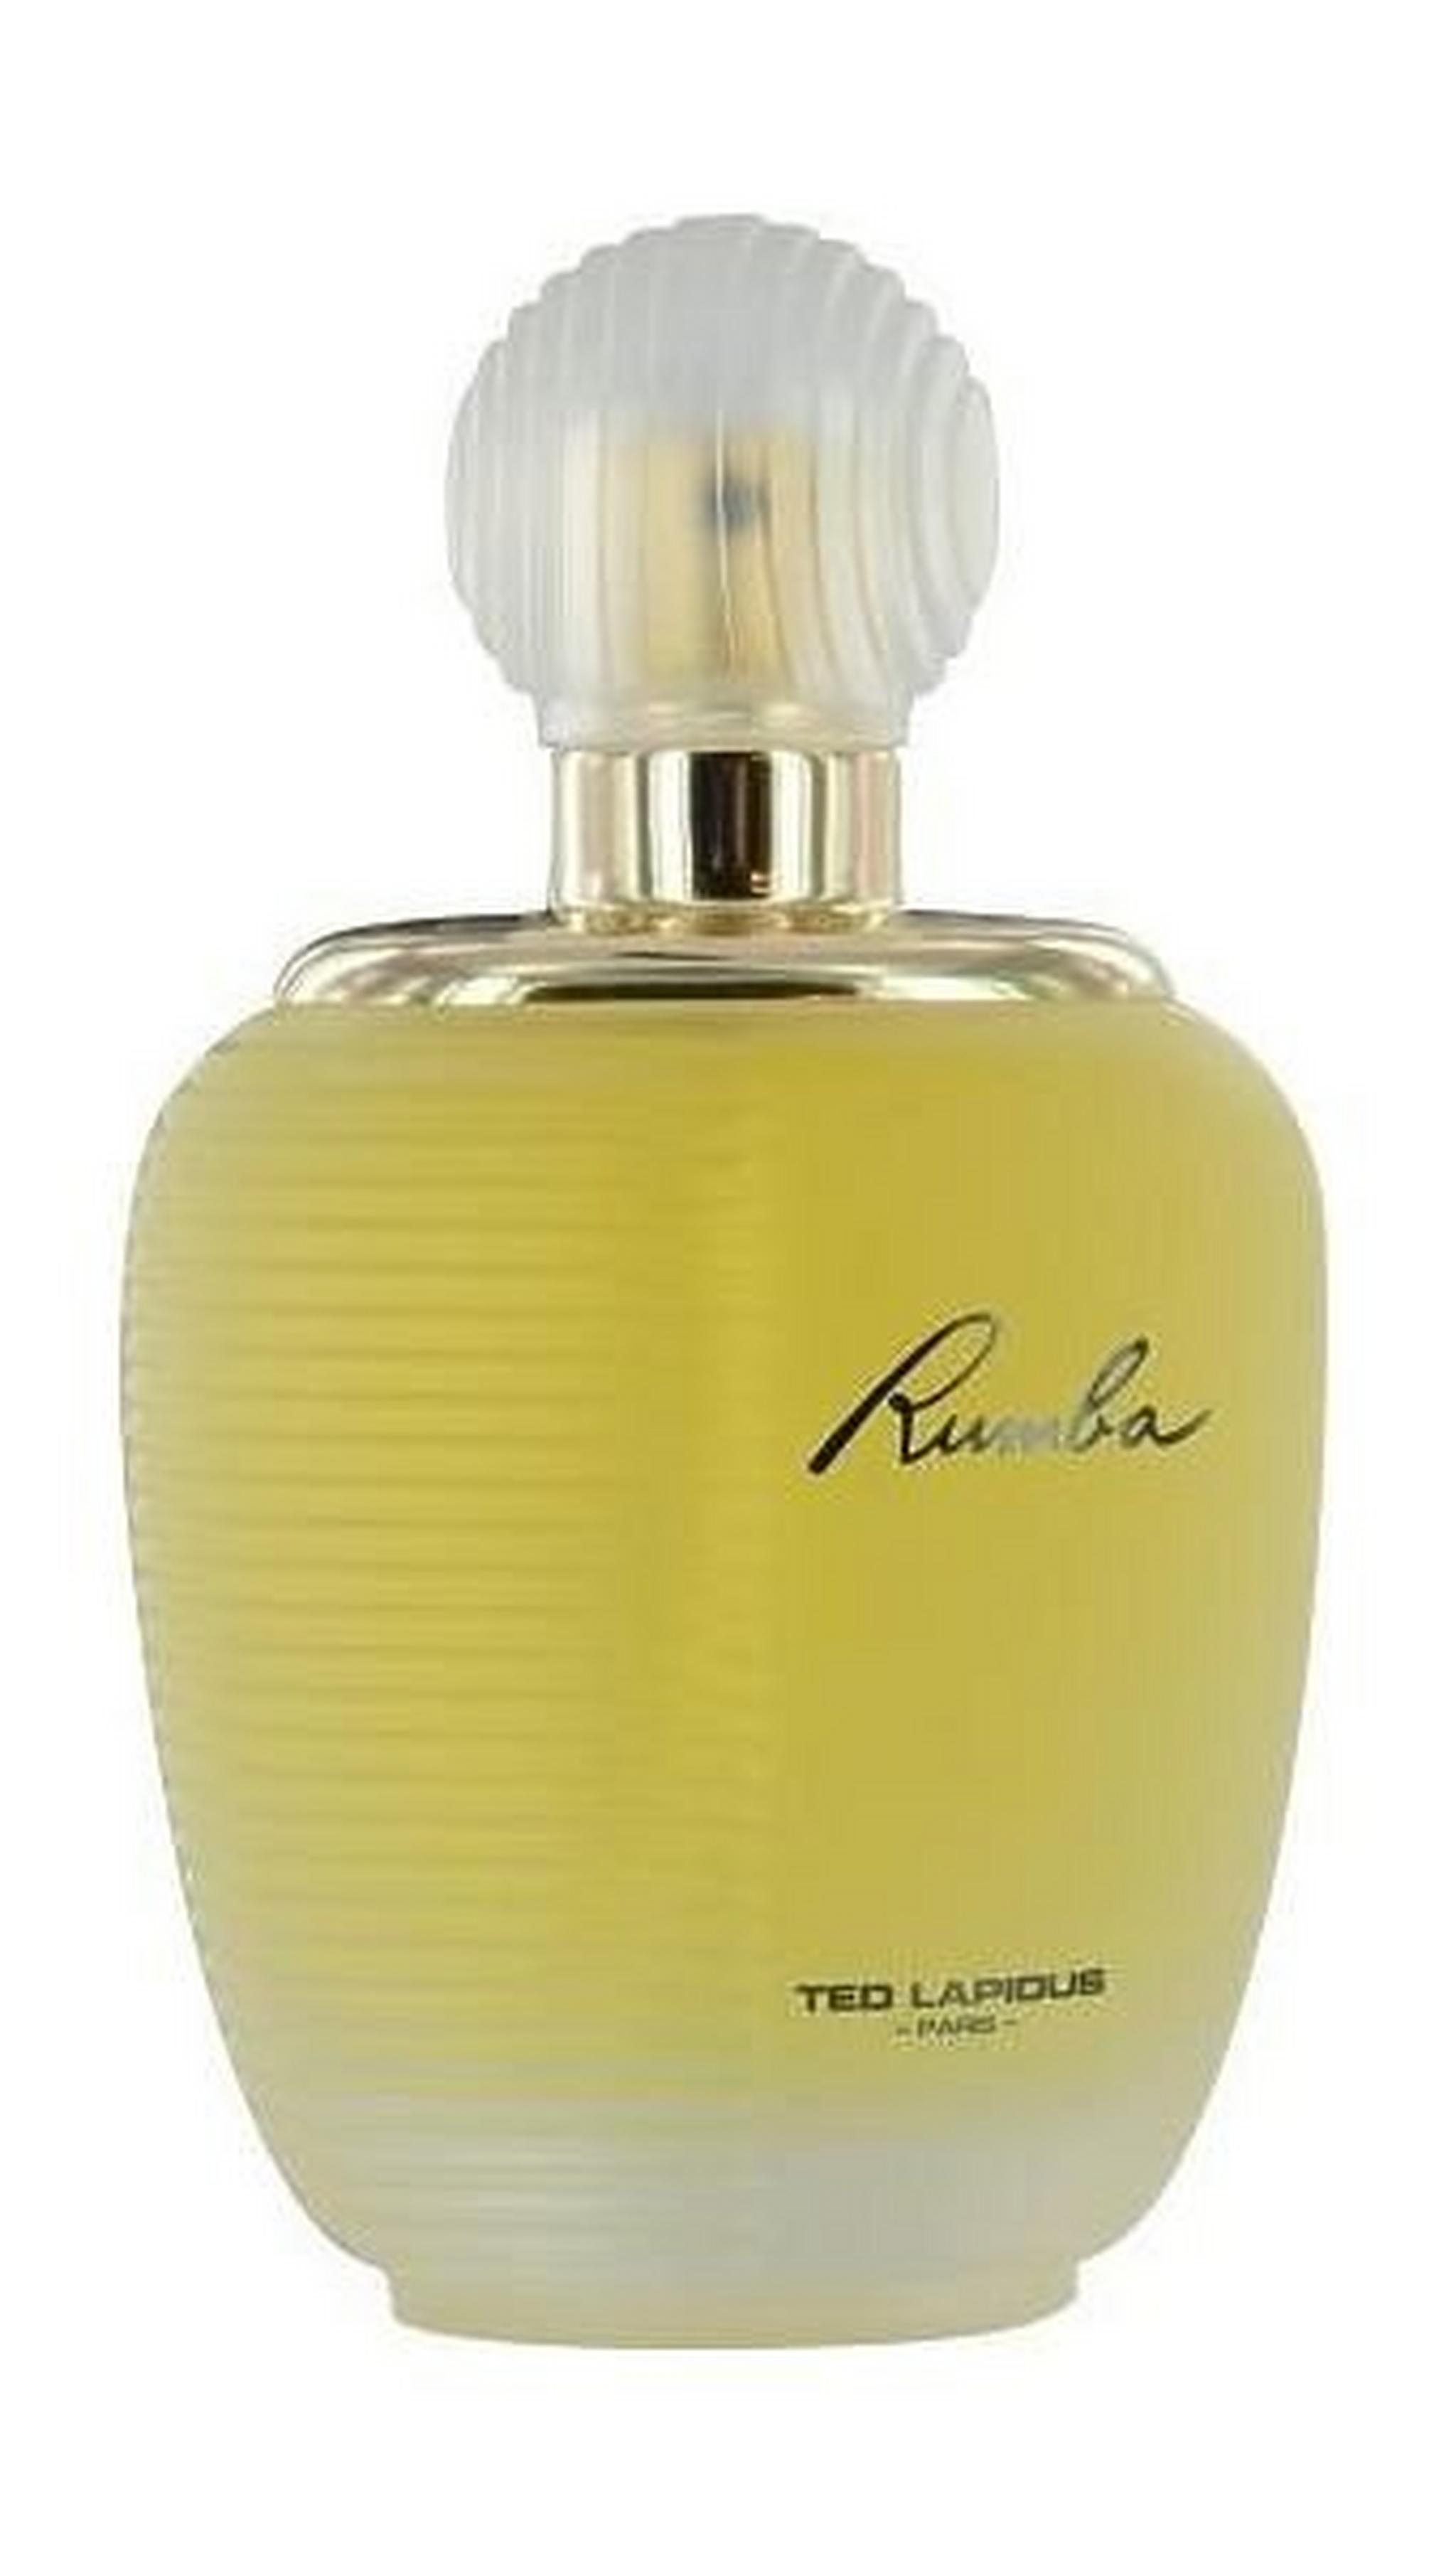 Rumba by Ted Lapidus 100ml Womens Perfume Eau de Toilette